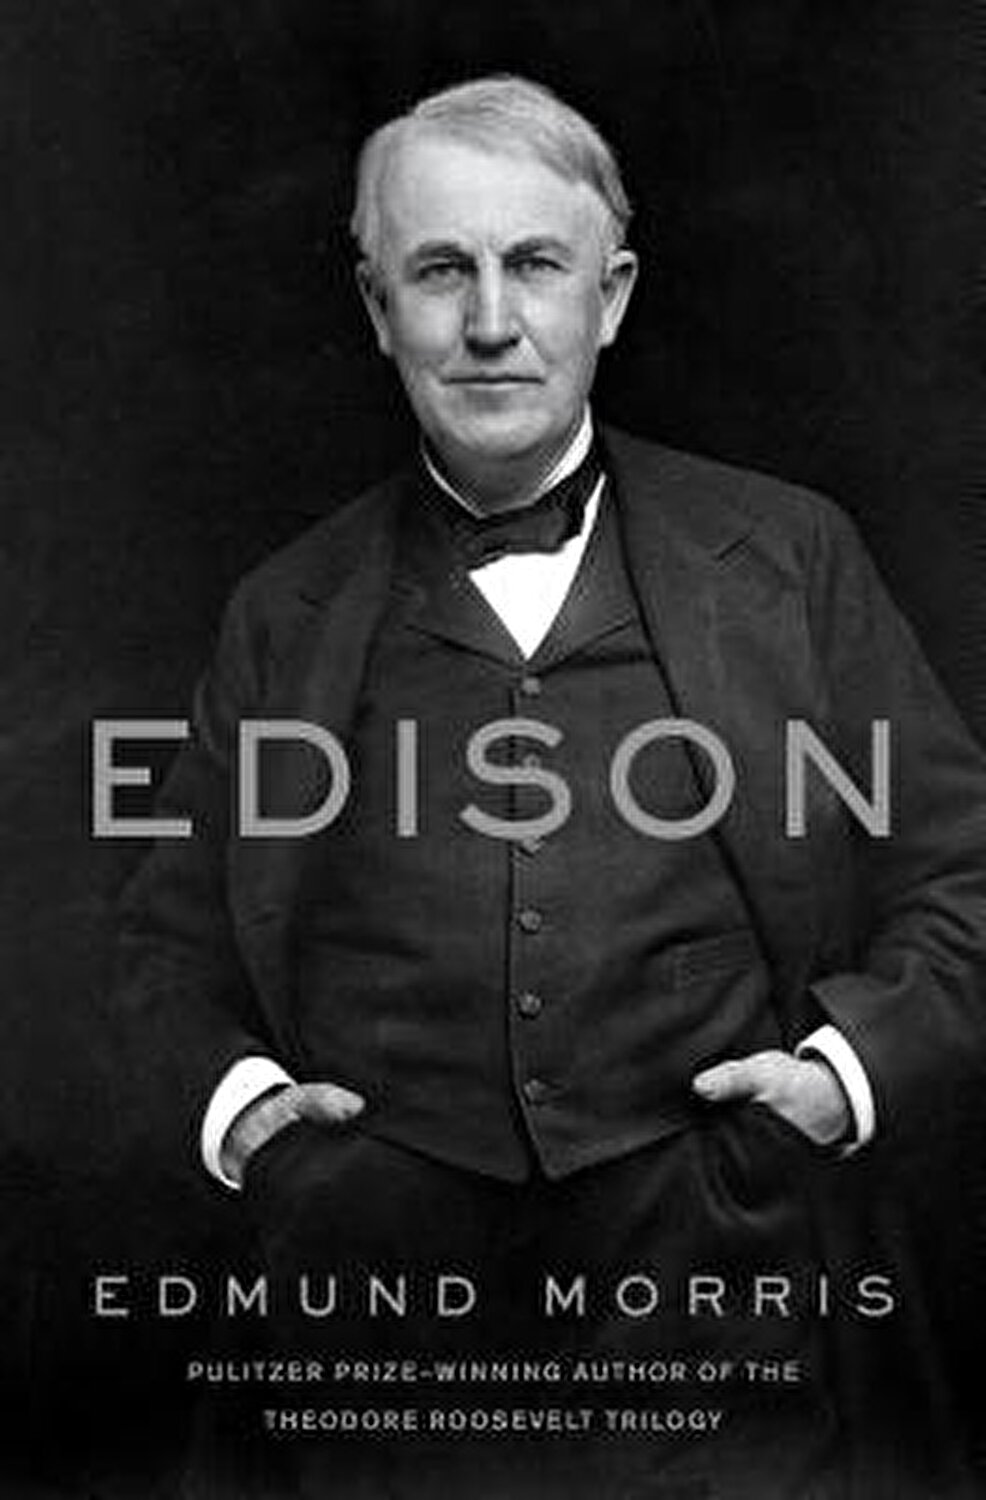 Edison Morris